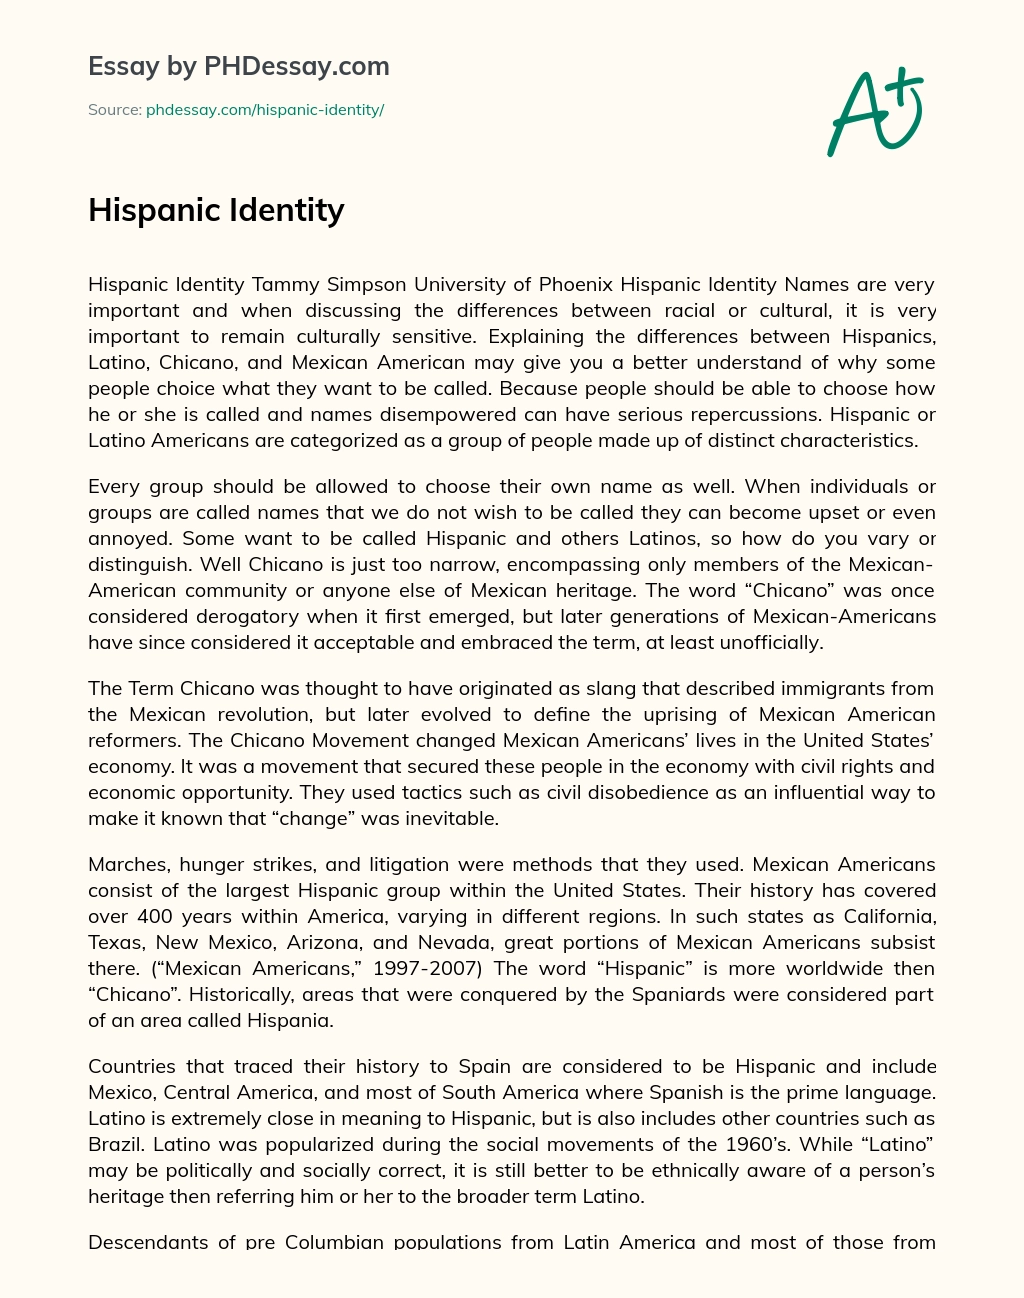 Hispanic Identity essay